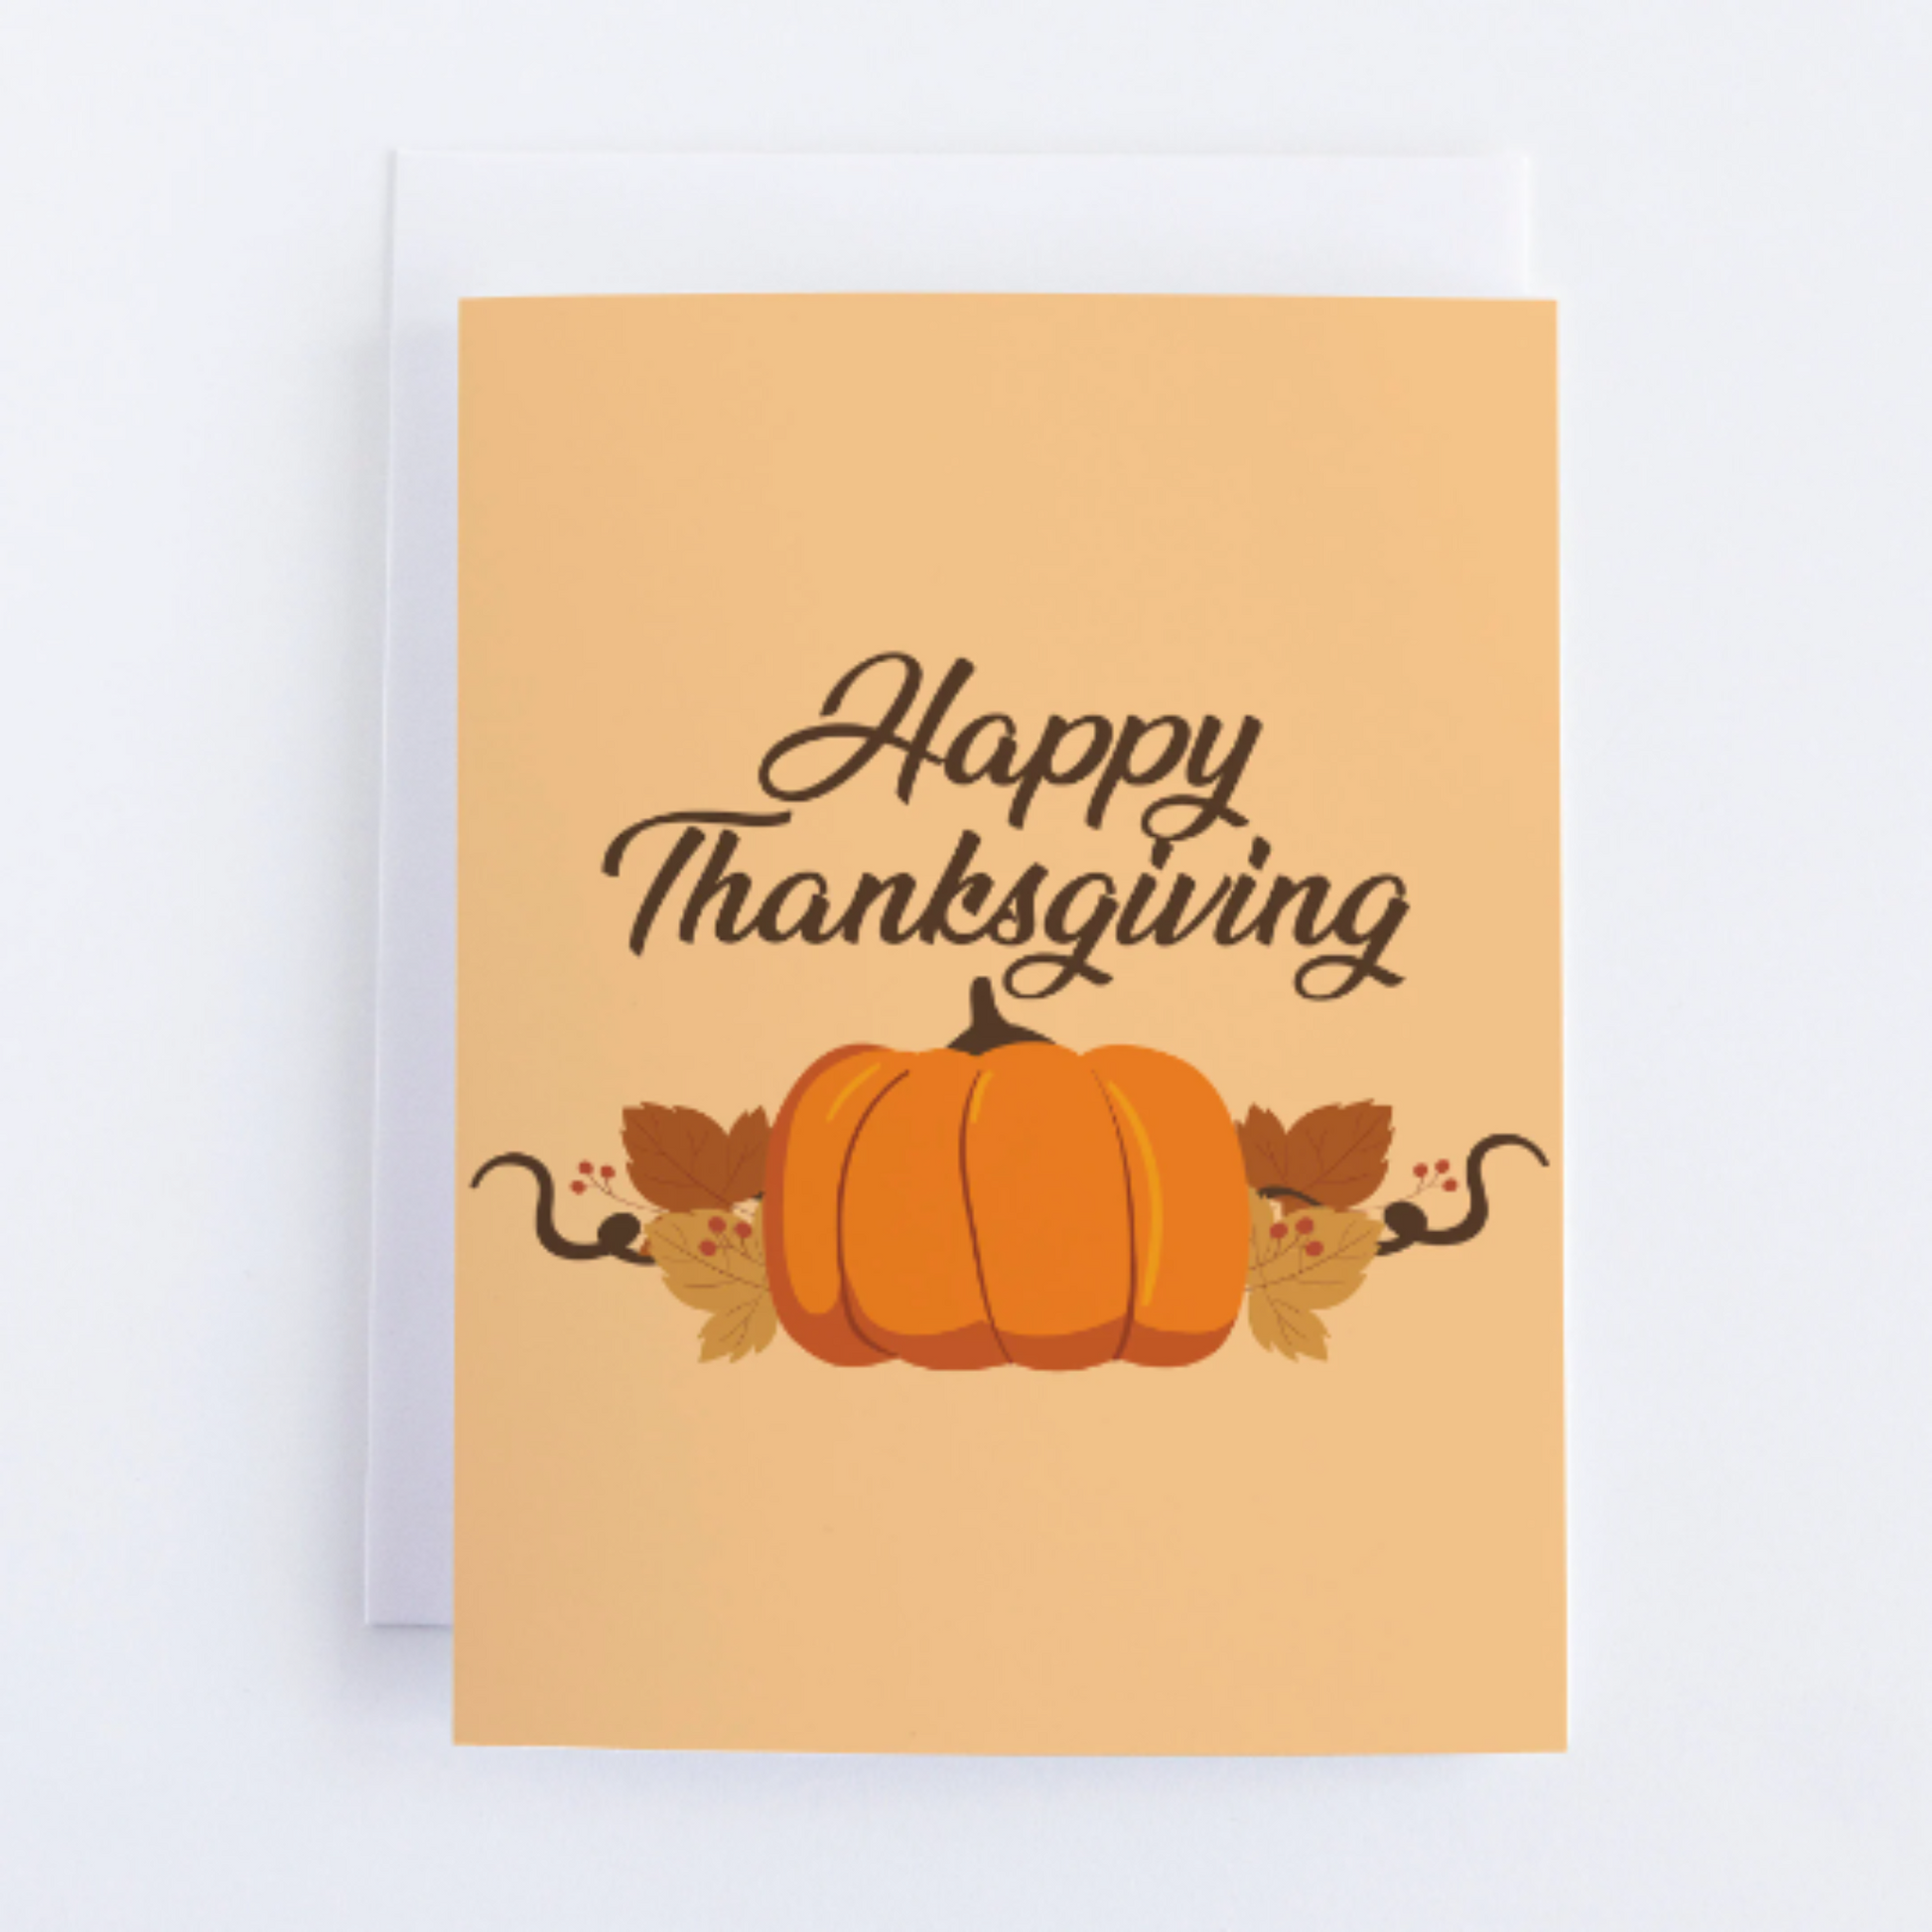 Happy Thanksgiving Fall Pumpkin Greeting Card.